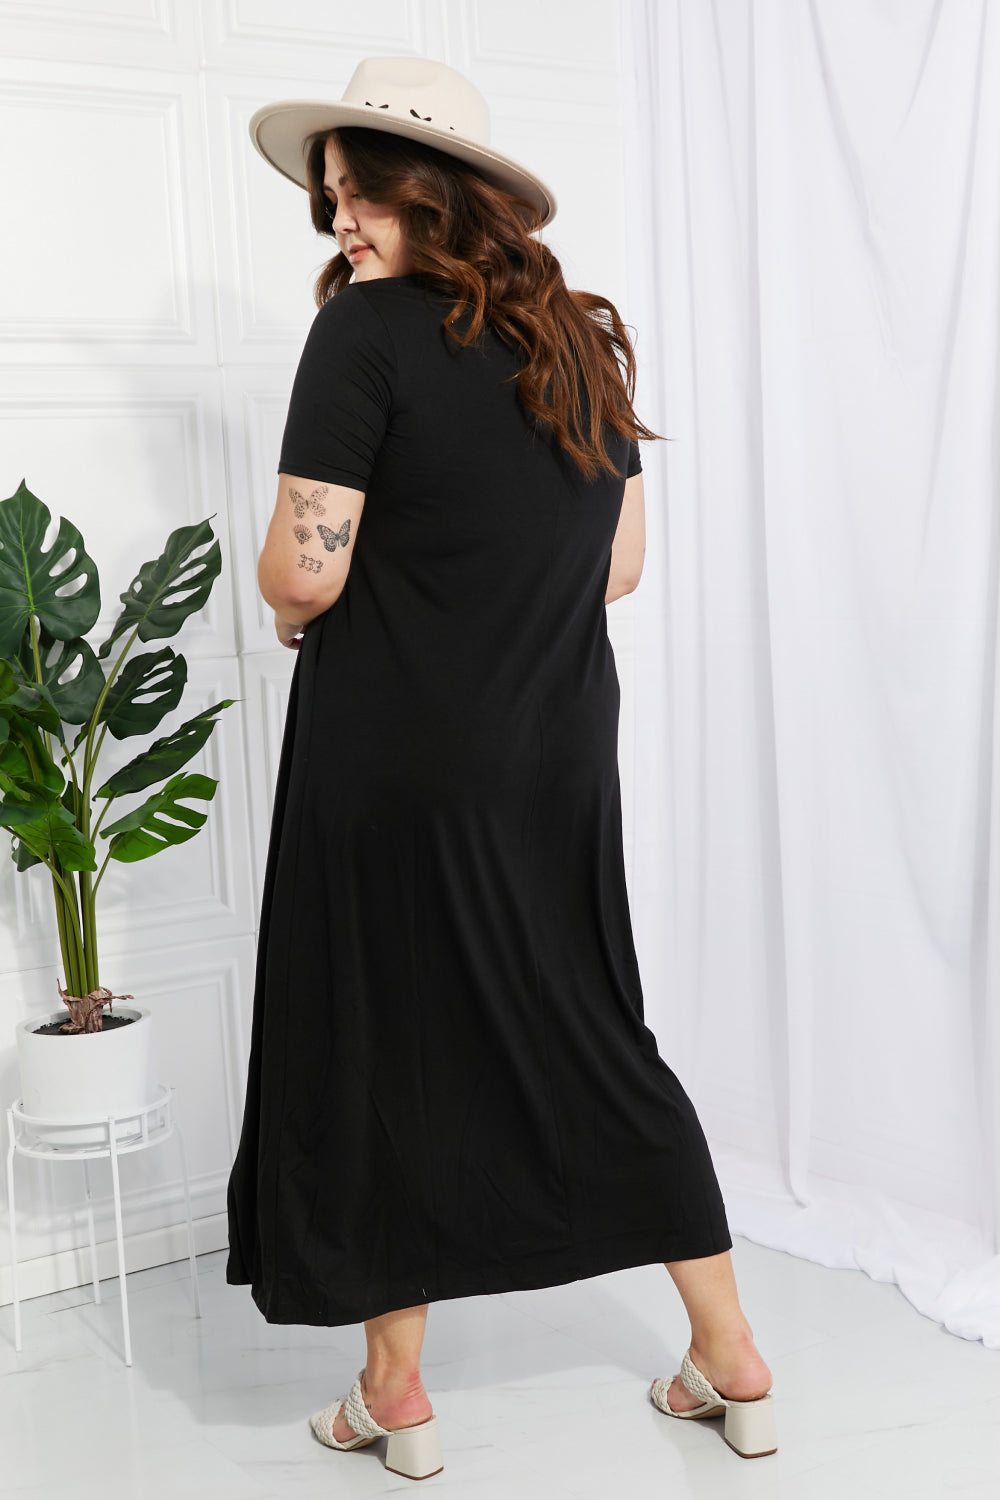 Zenana Simple Wonder Pocket Maxi Dress in Black